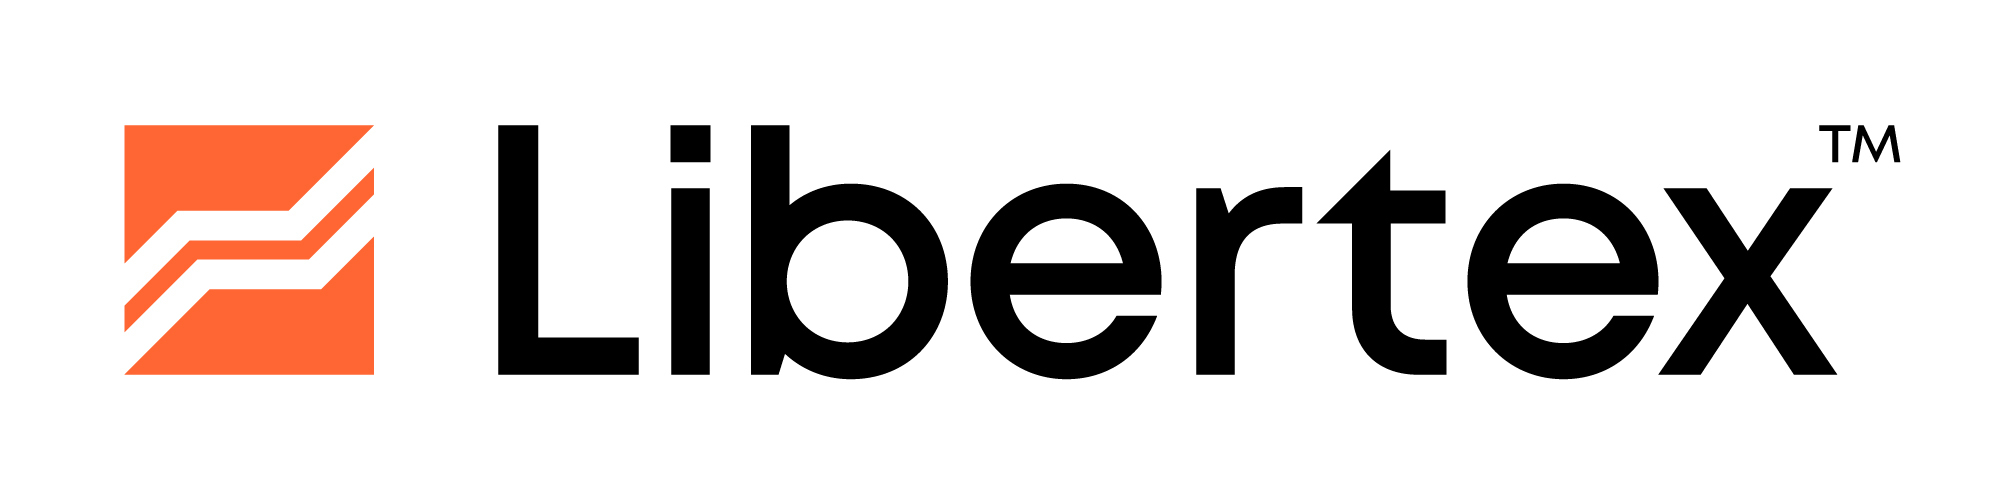 Логотип Libertex